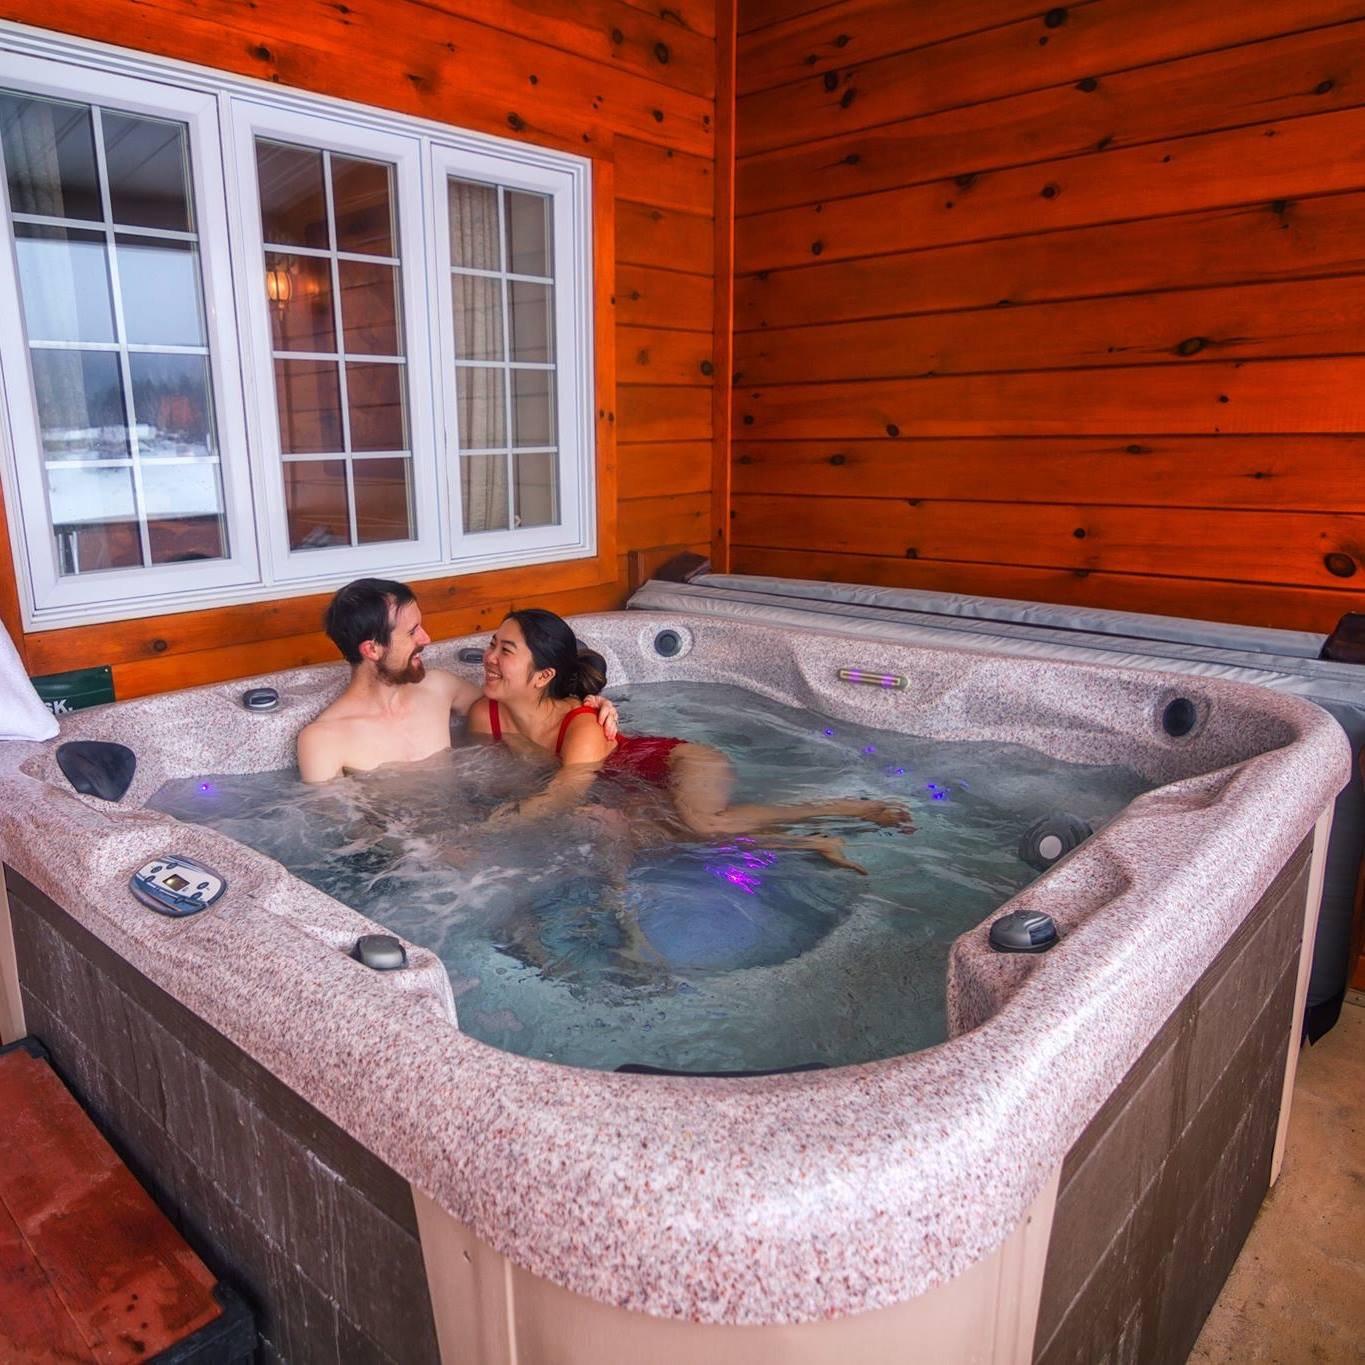 Couples enjoying a outdoor hot tub